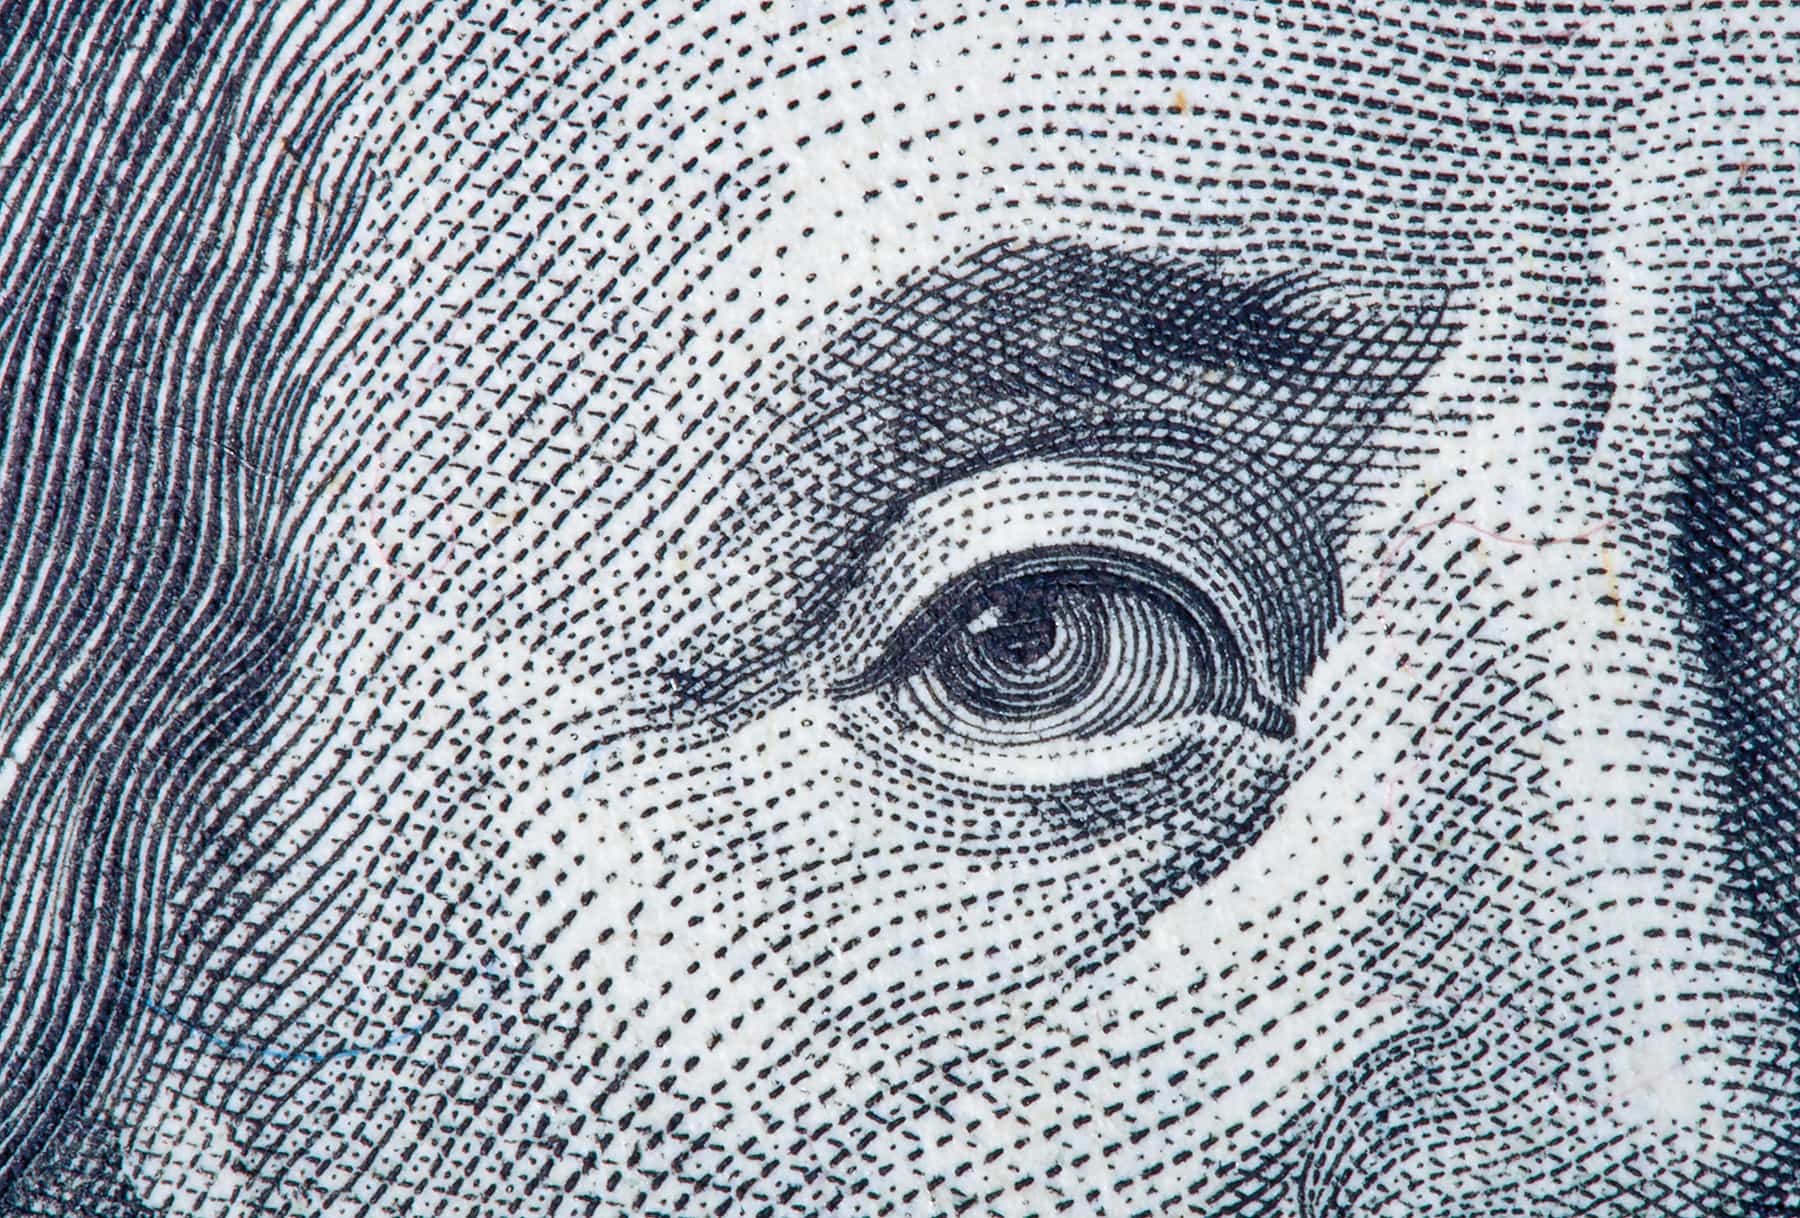 close up image of $100 bill